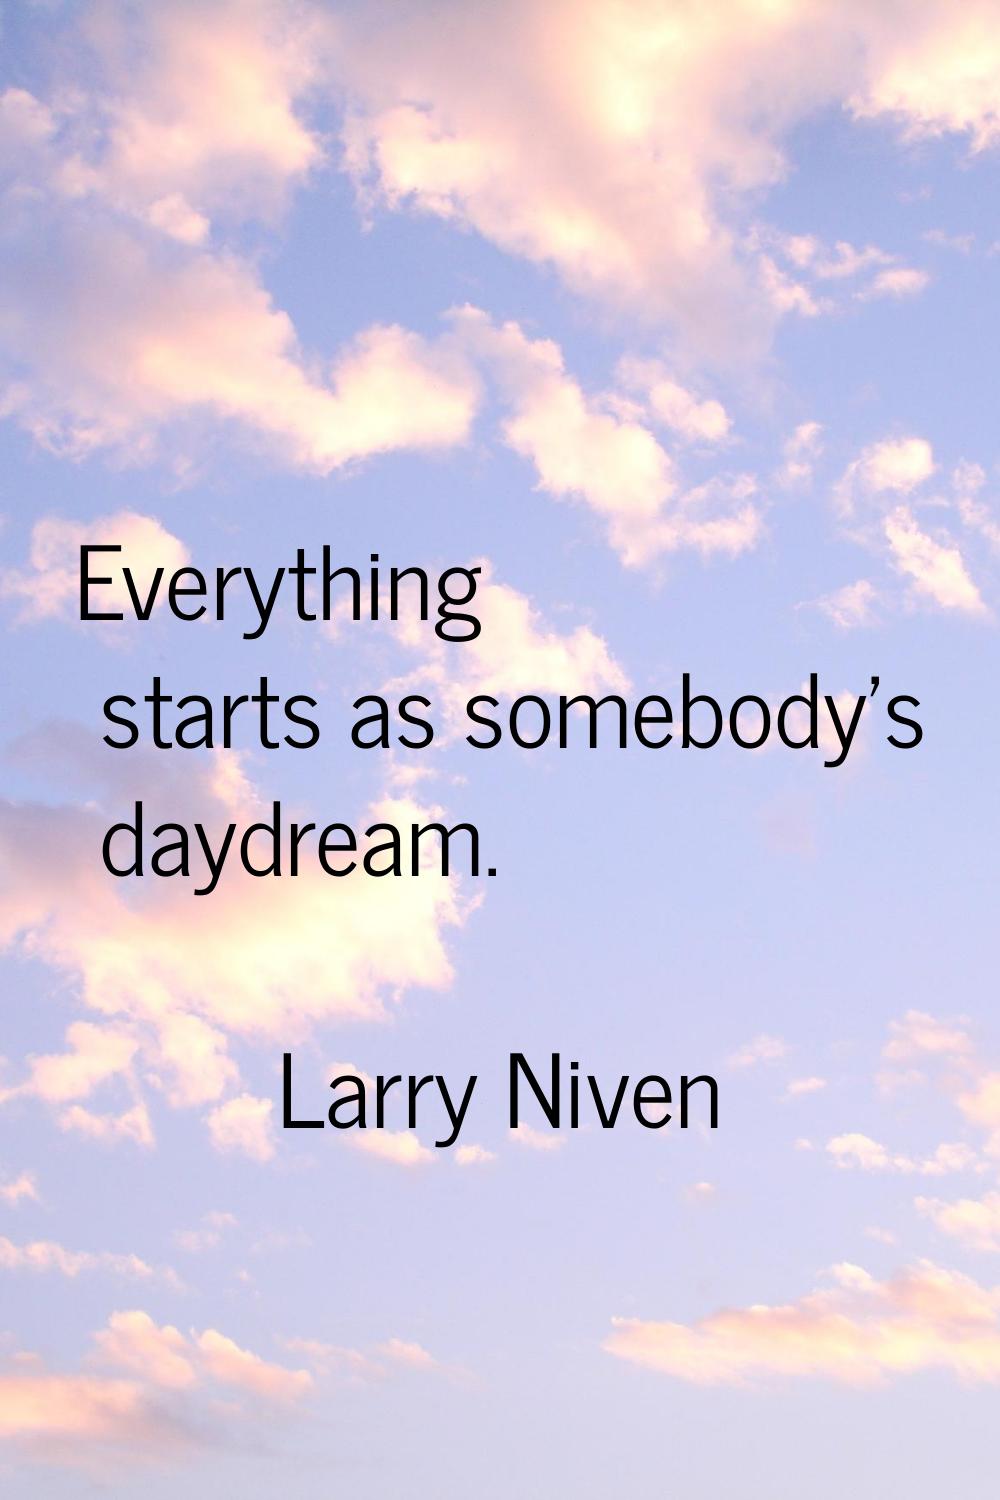 Everything starts as somebody's daydream.